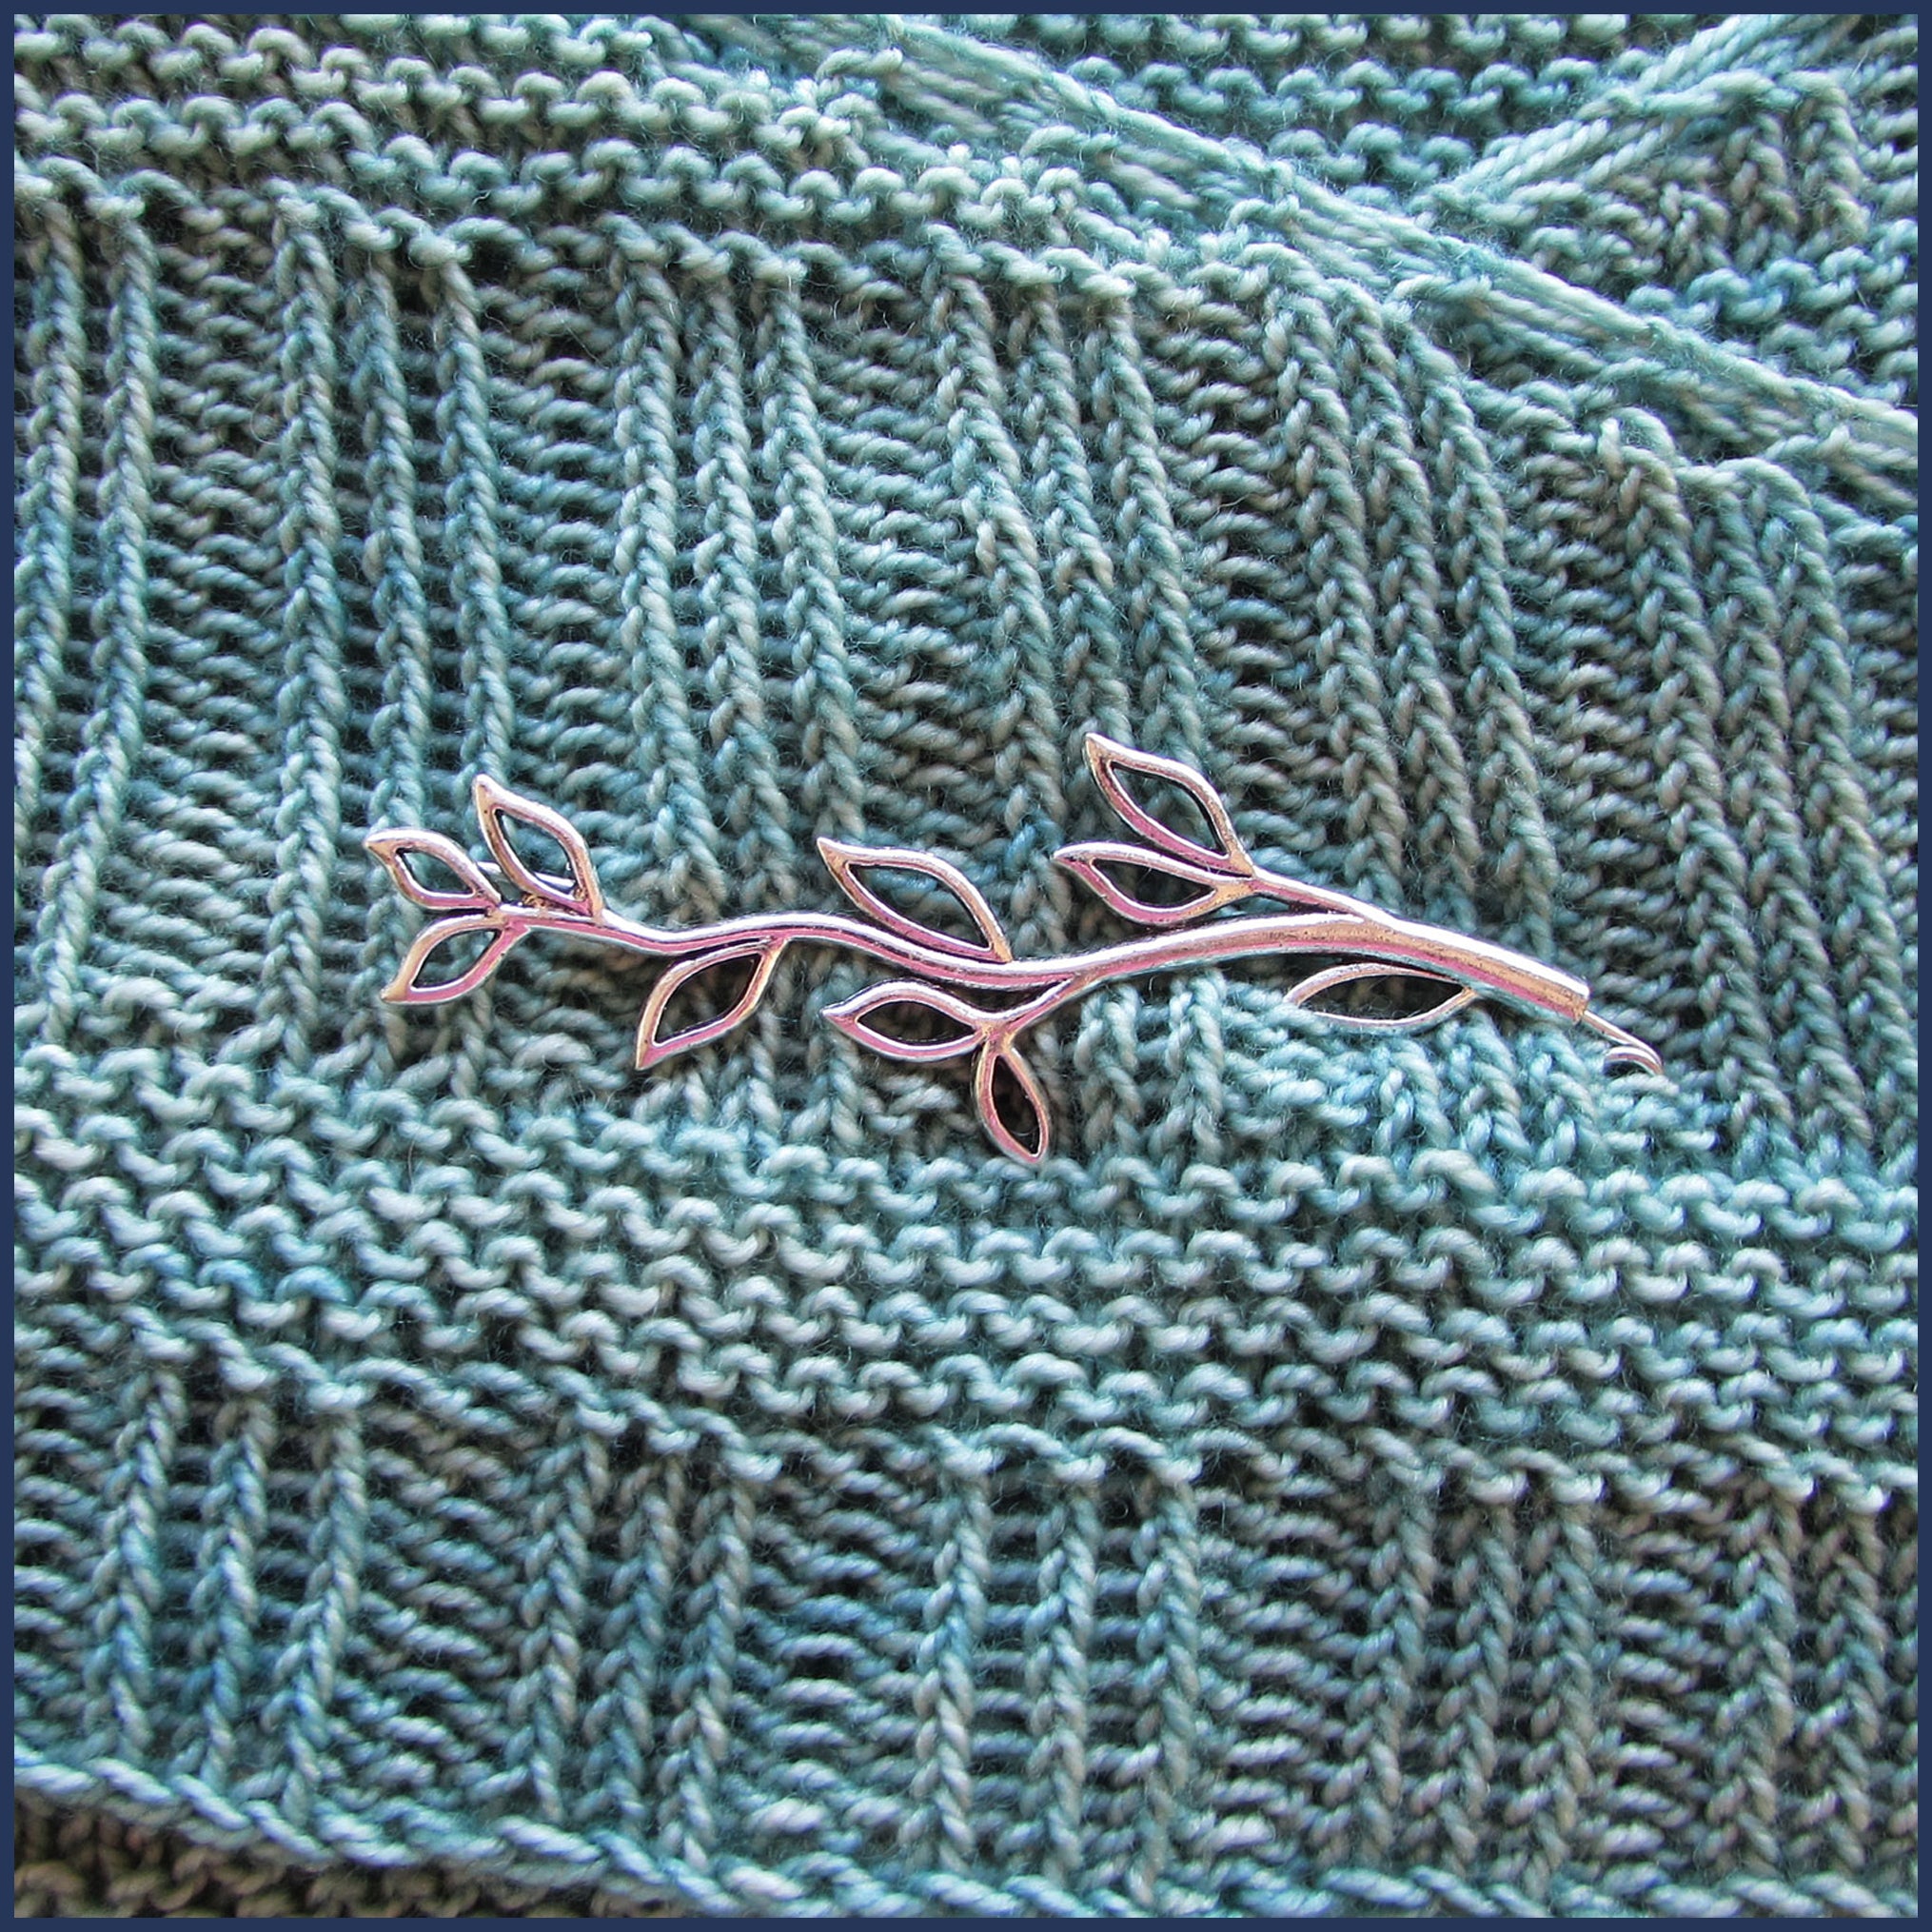 TukoniTribe Grey Moth Enamel Pin, Knitting Ball Pin Brooch, Knitting Gifts for Women, Tukoni